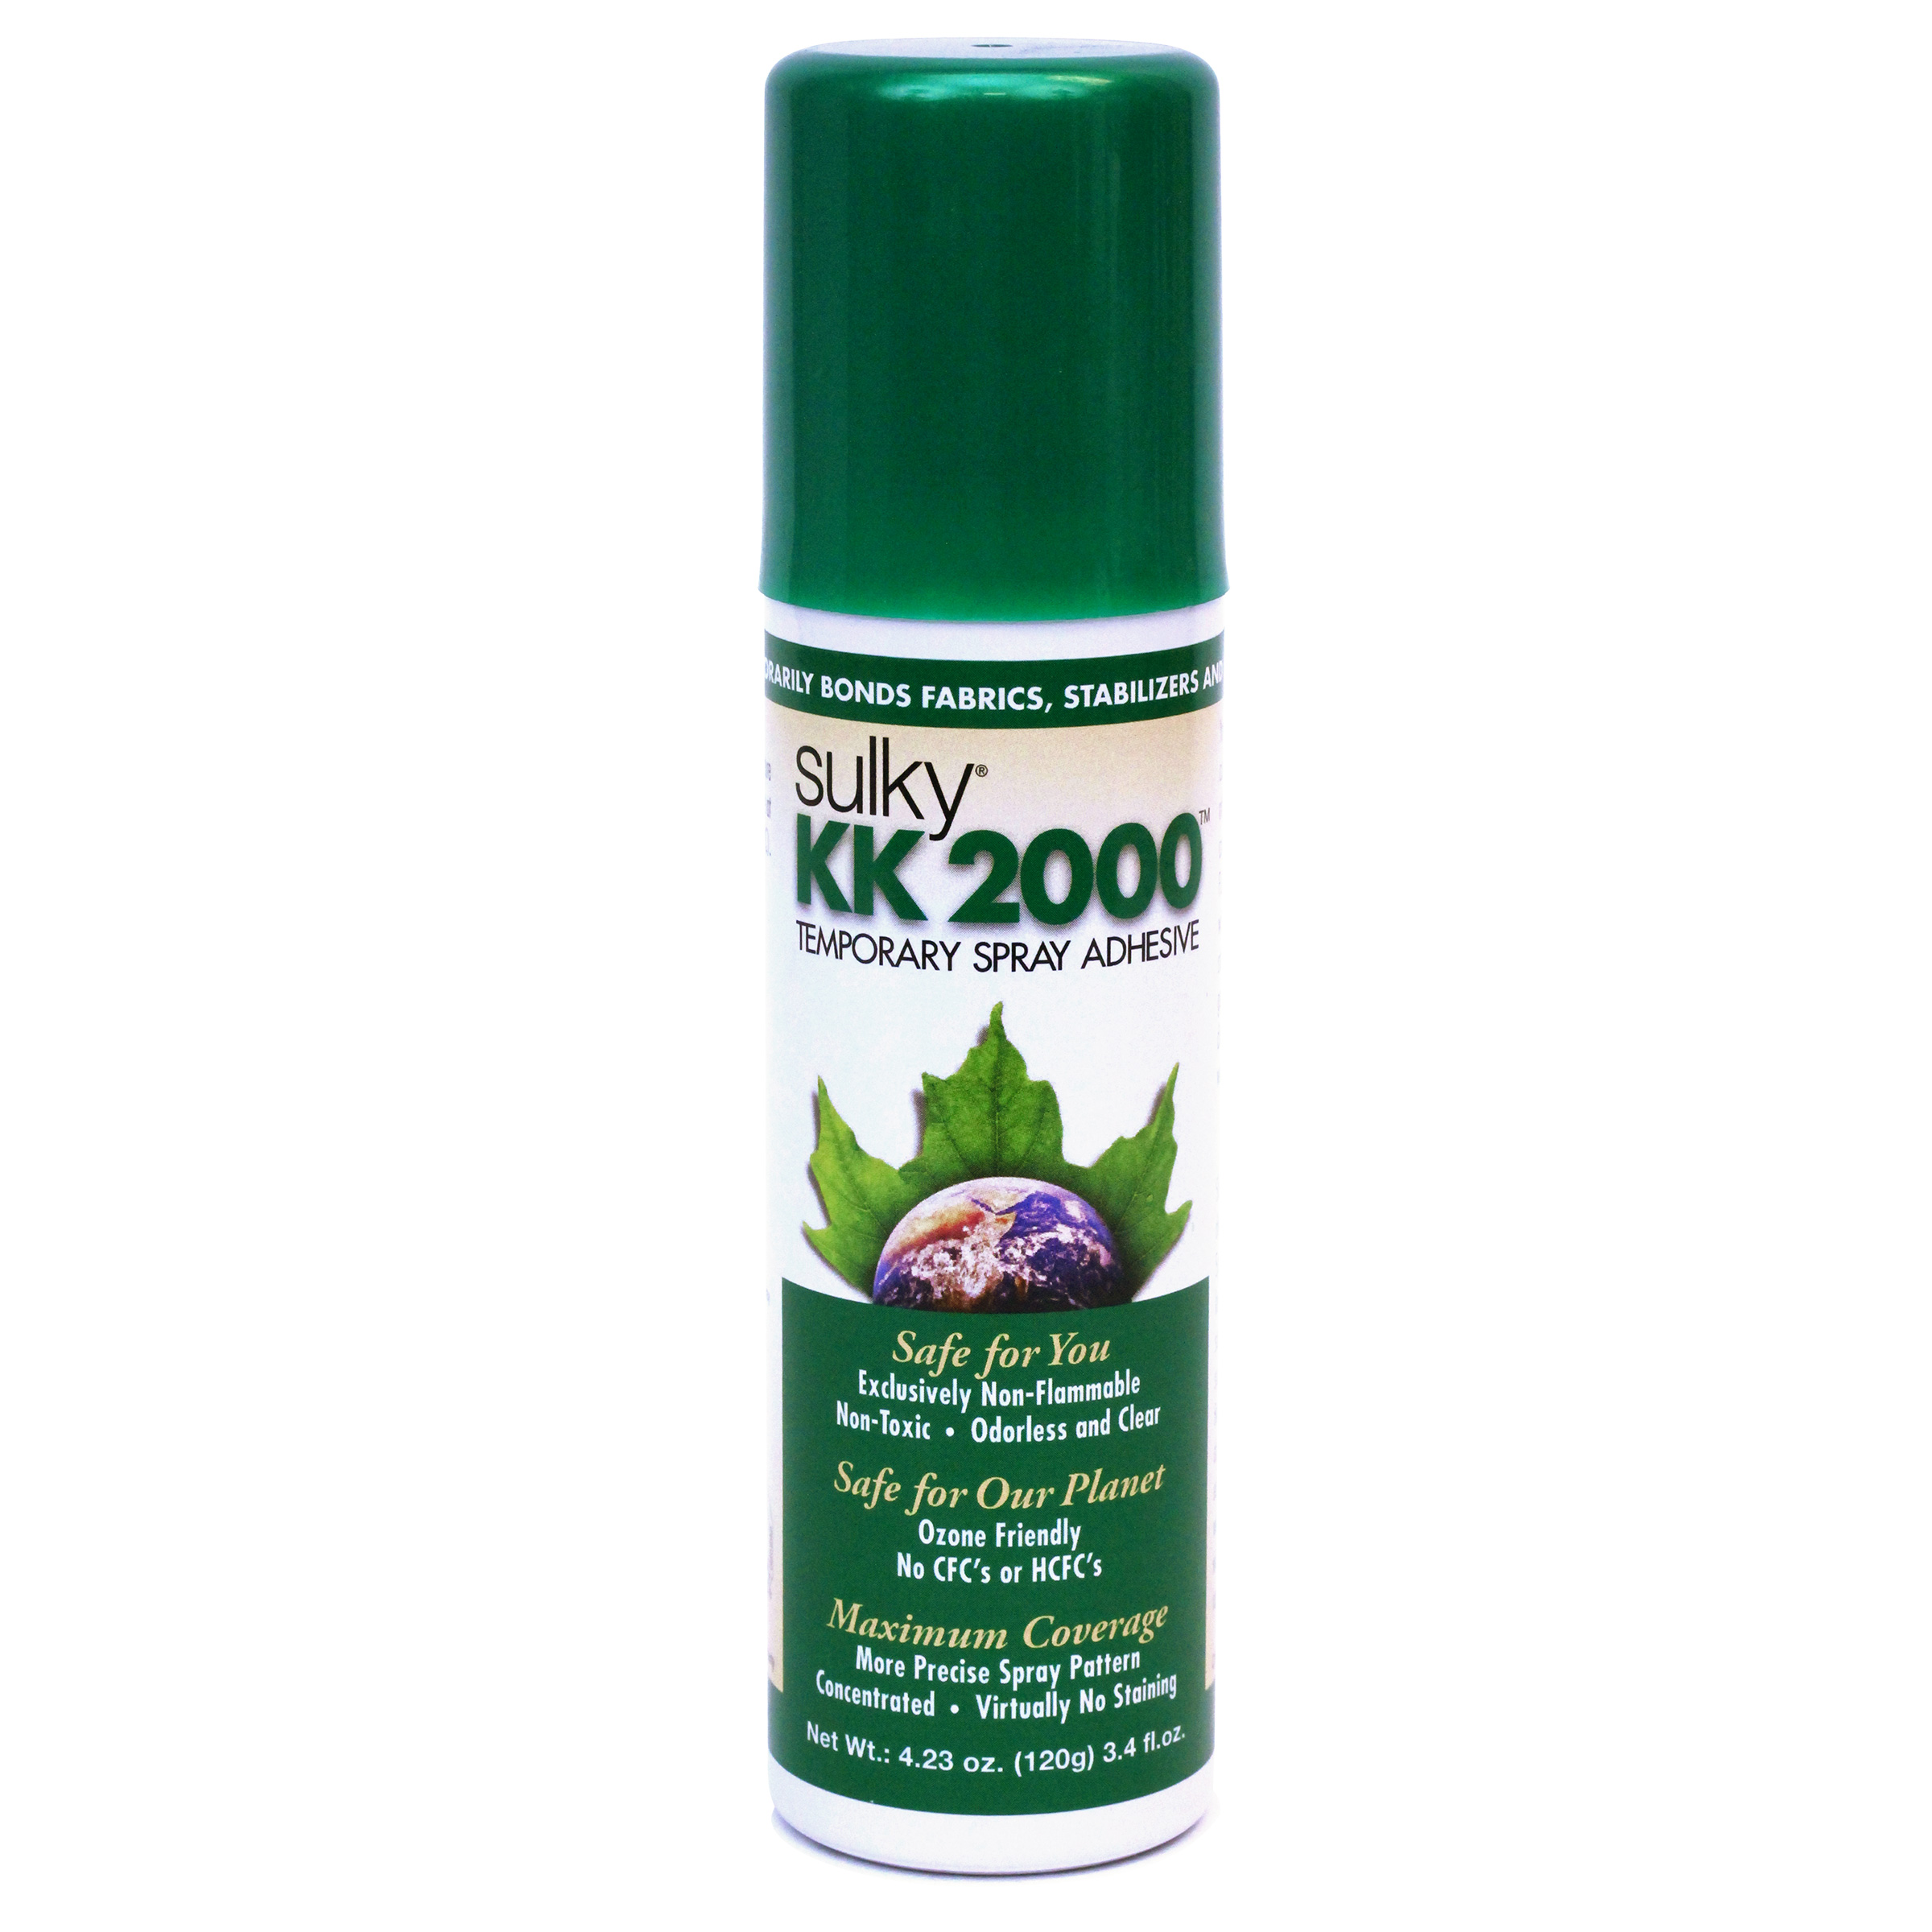 KK 2000 Temporary Spray Adhesive - 4.2 oz., 120g Questions & Answers